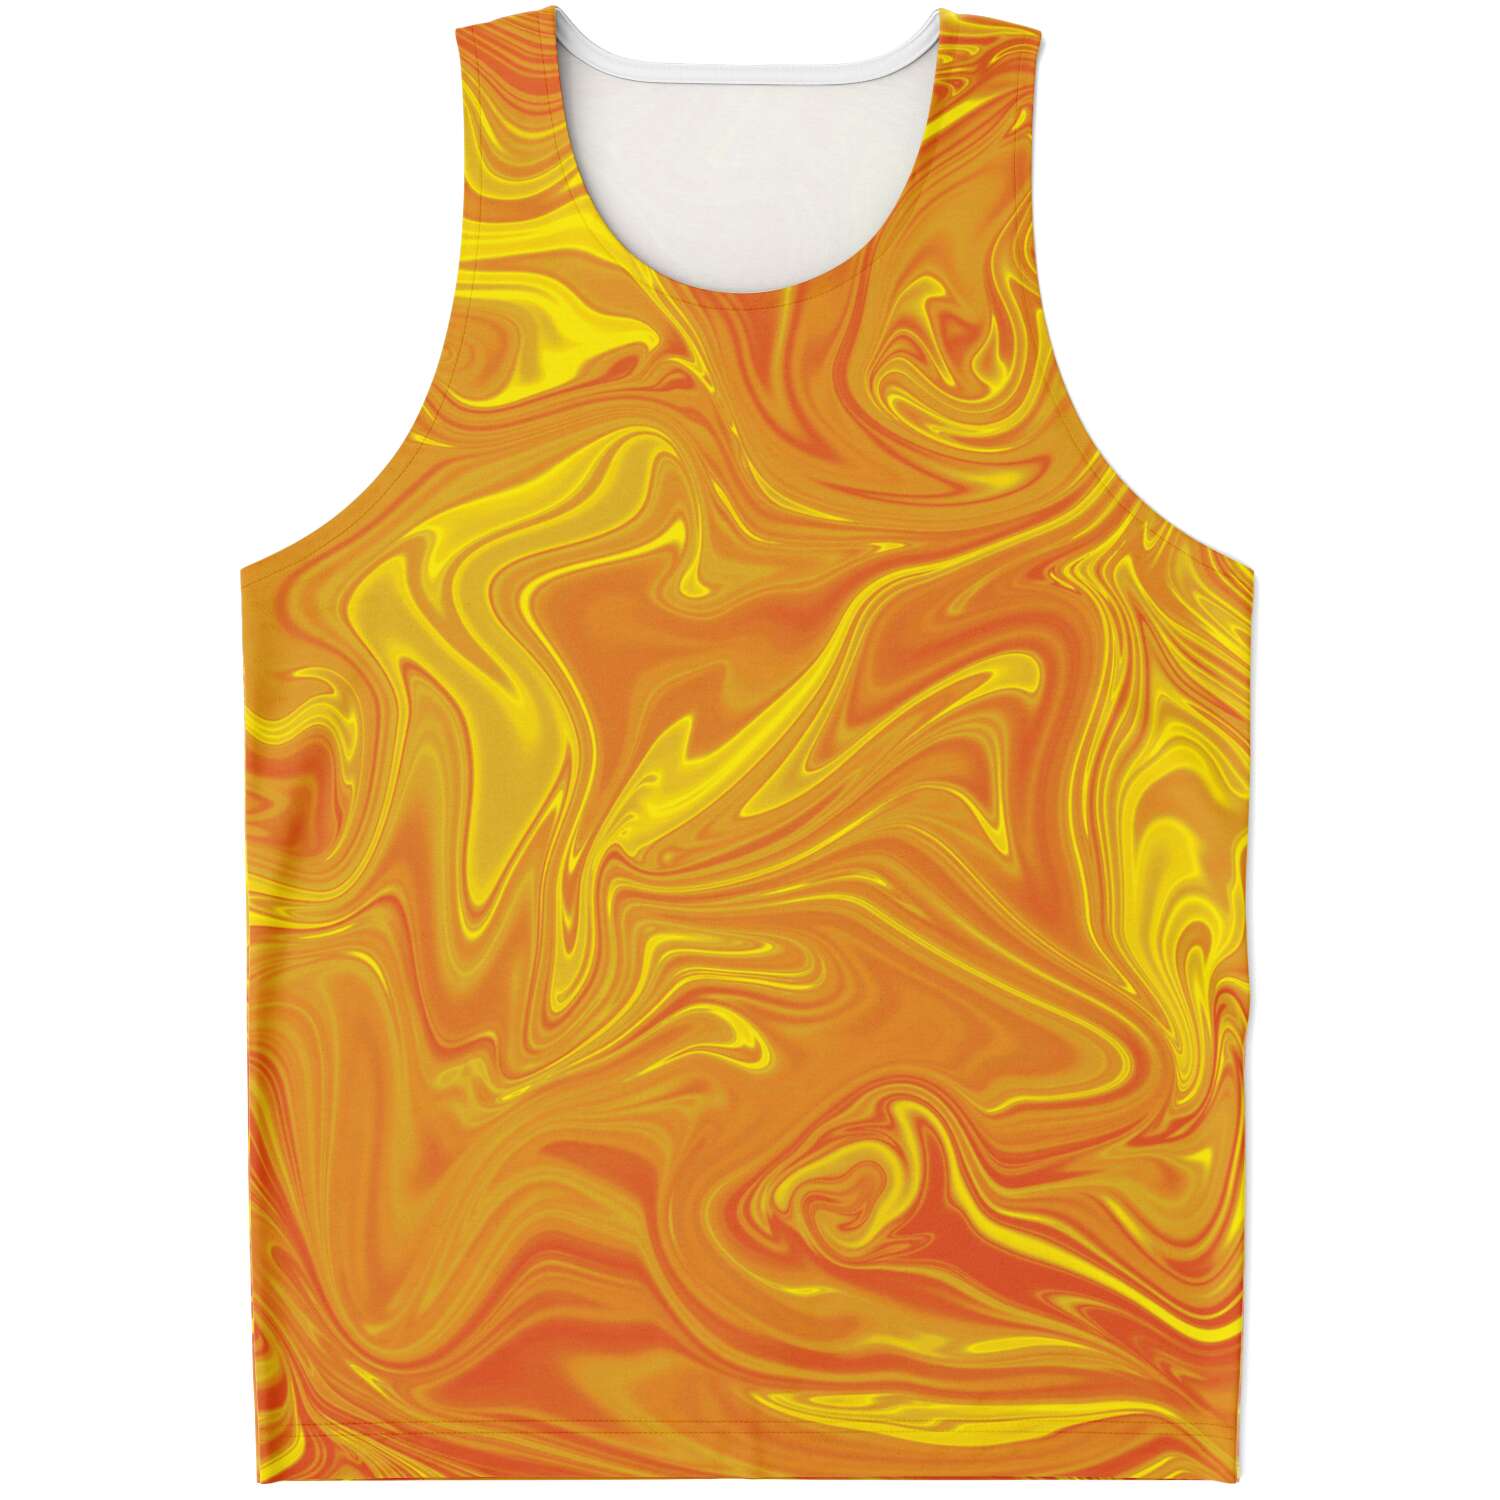 Golden Liquid Paint Swirls Psychedelic Waves Unisex Tank Top - kayzers